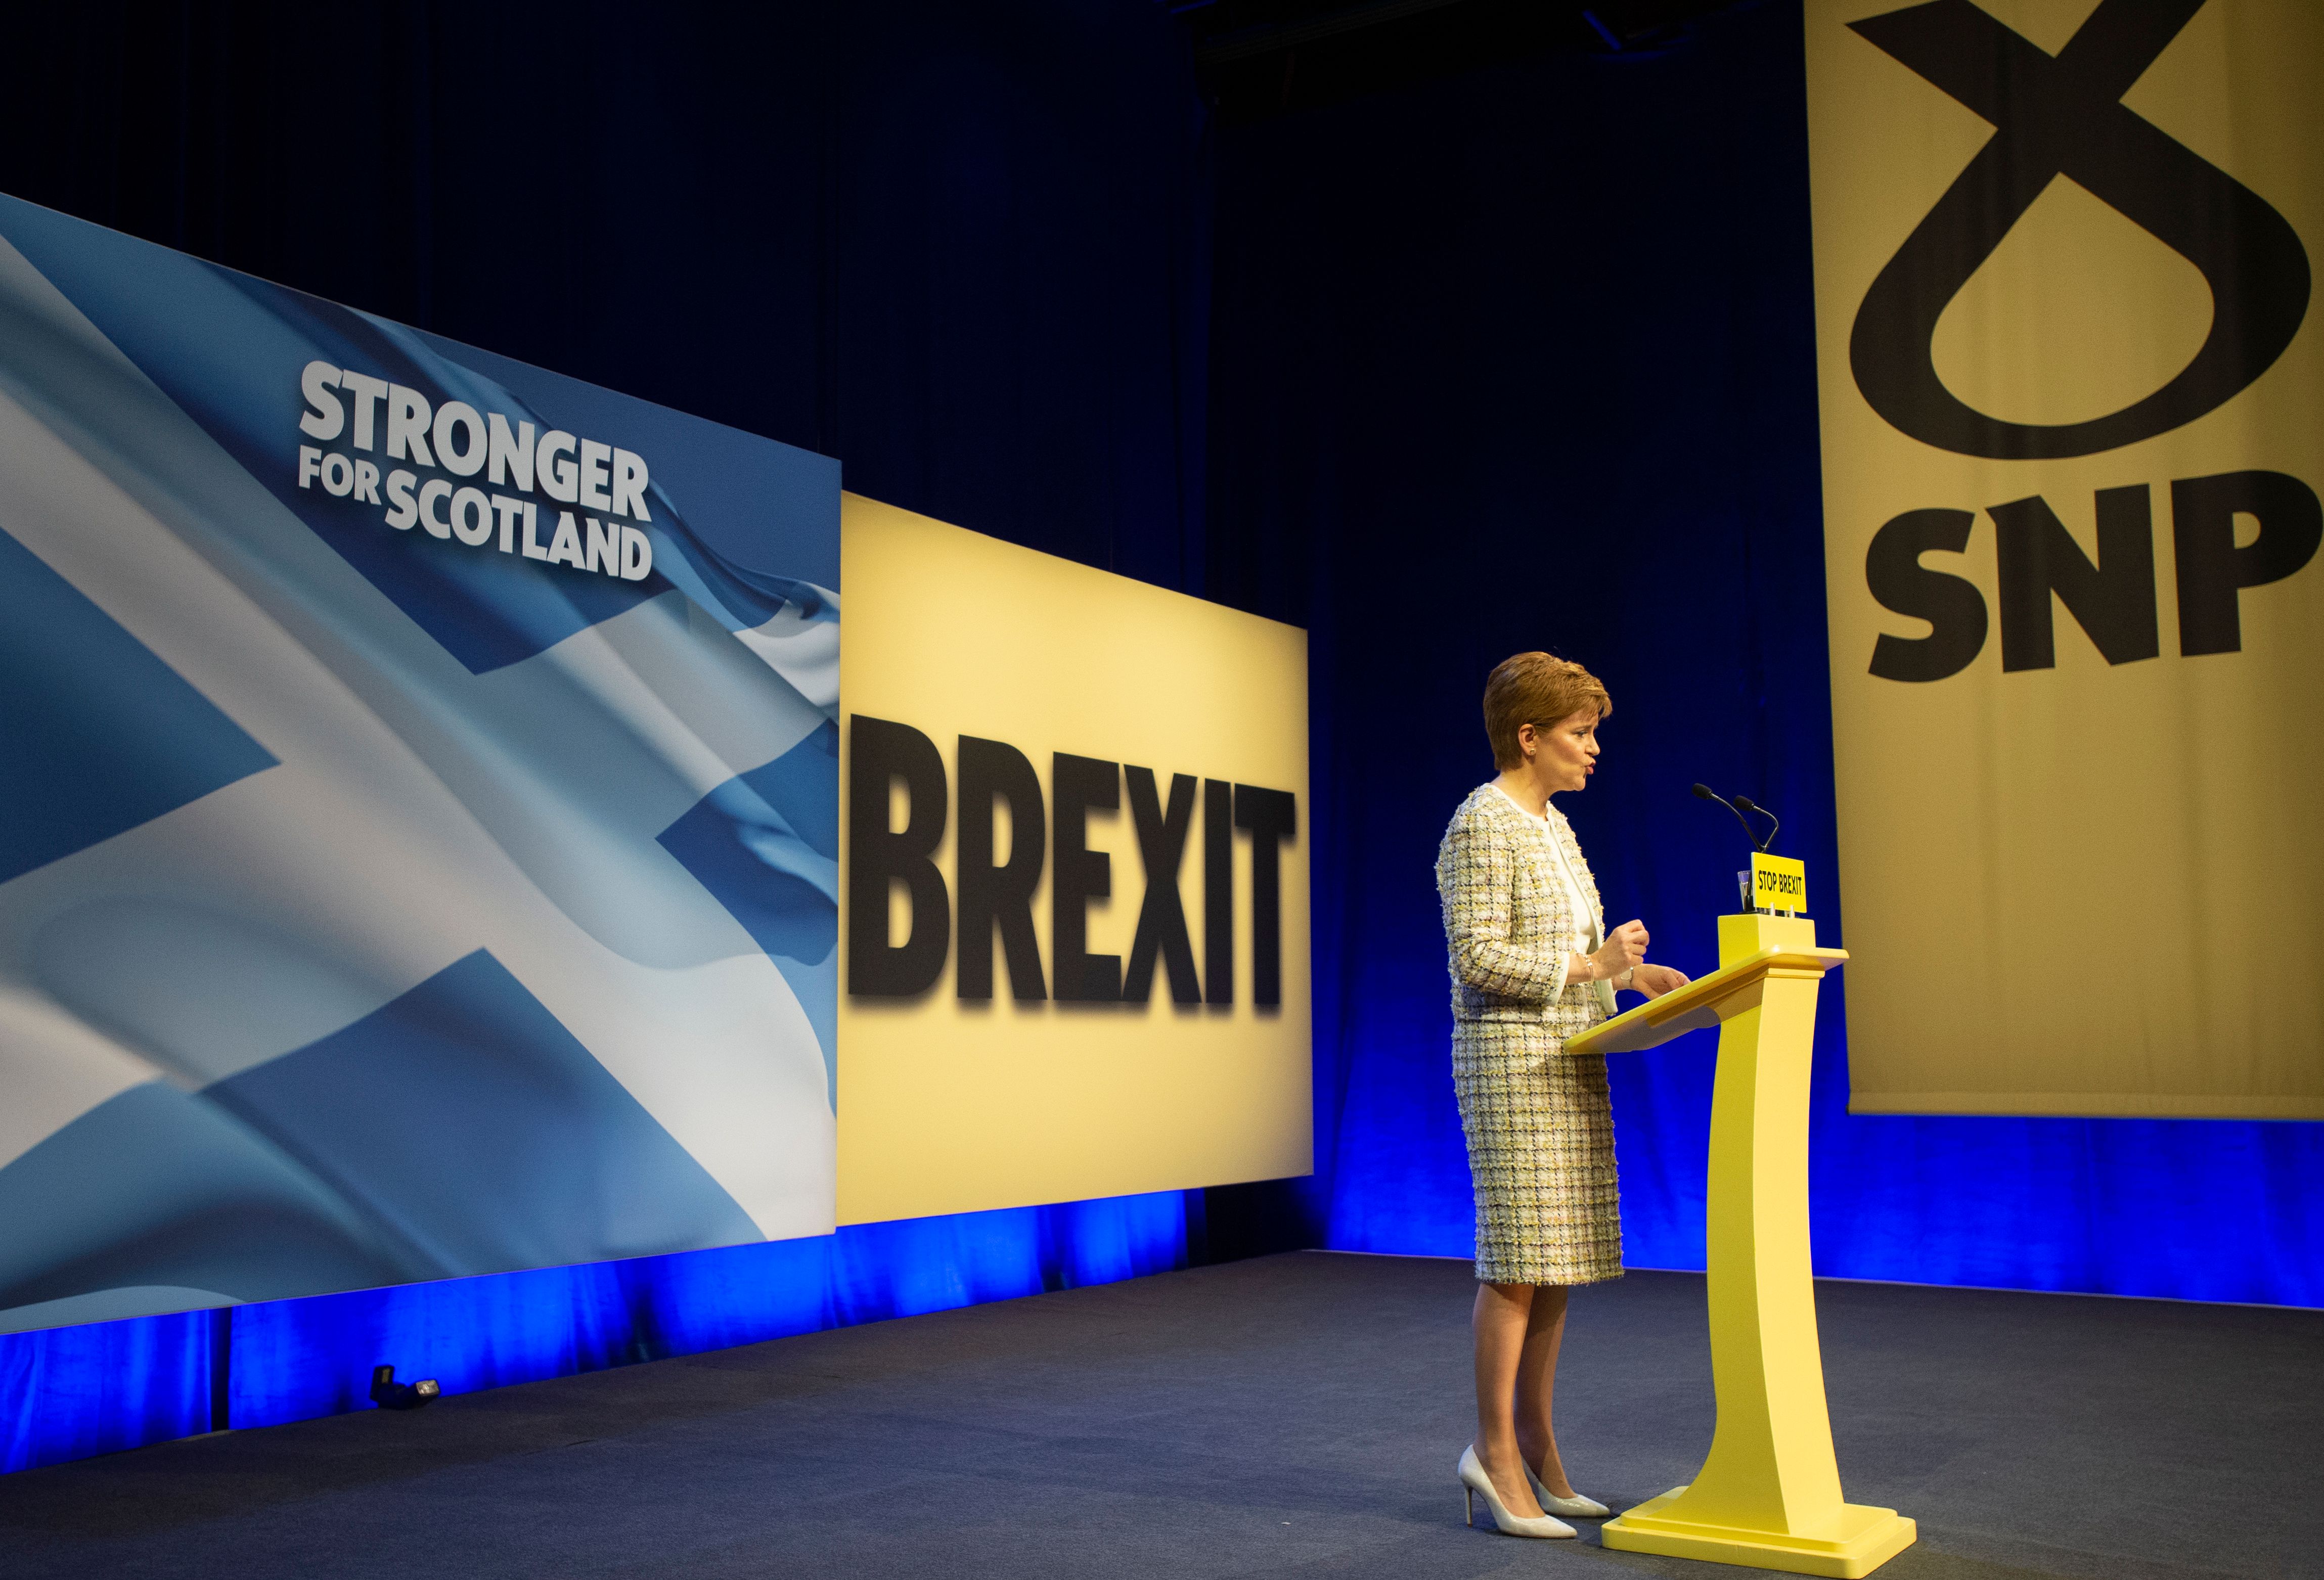 SNP manifesto launch: Scotland's First Minister Nicola Sturgeon launches the Scotland National Party (SNP) general election manifesto in Glasgow, Scotland on November 27, 2019.